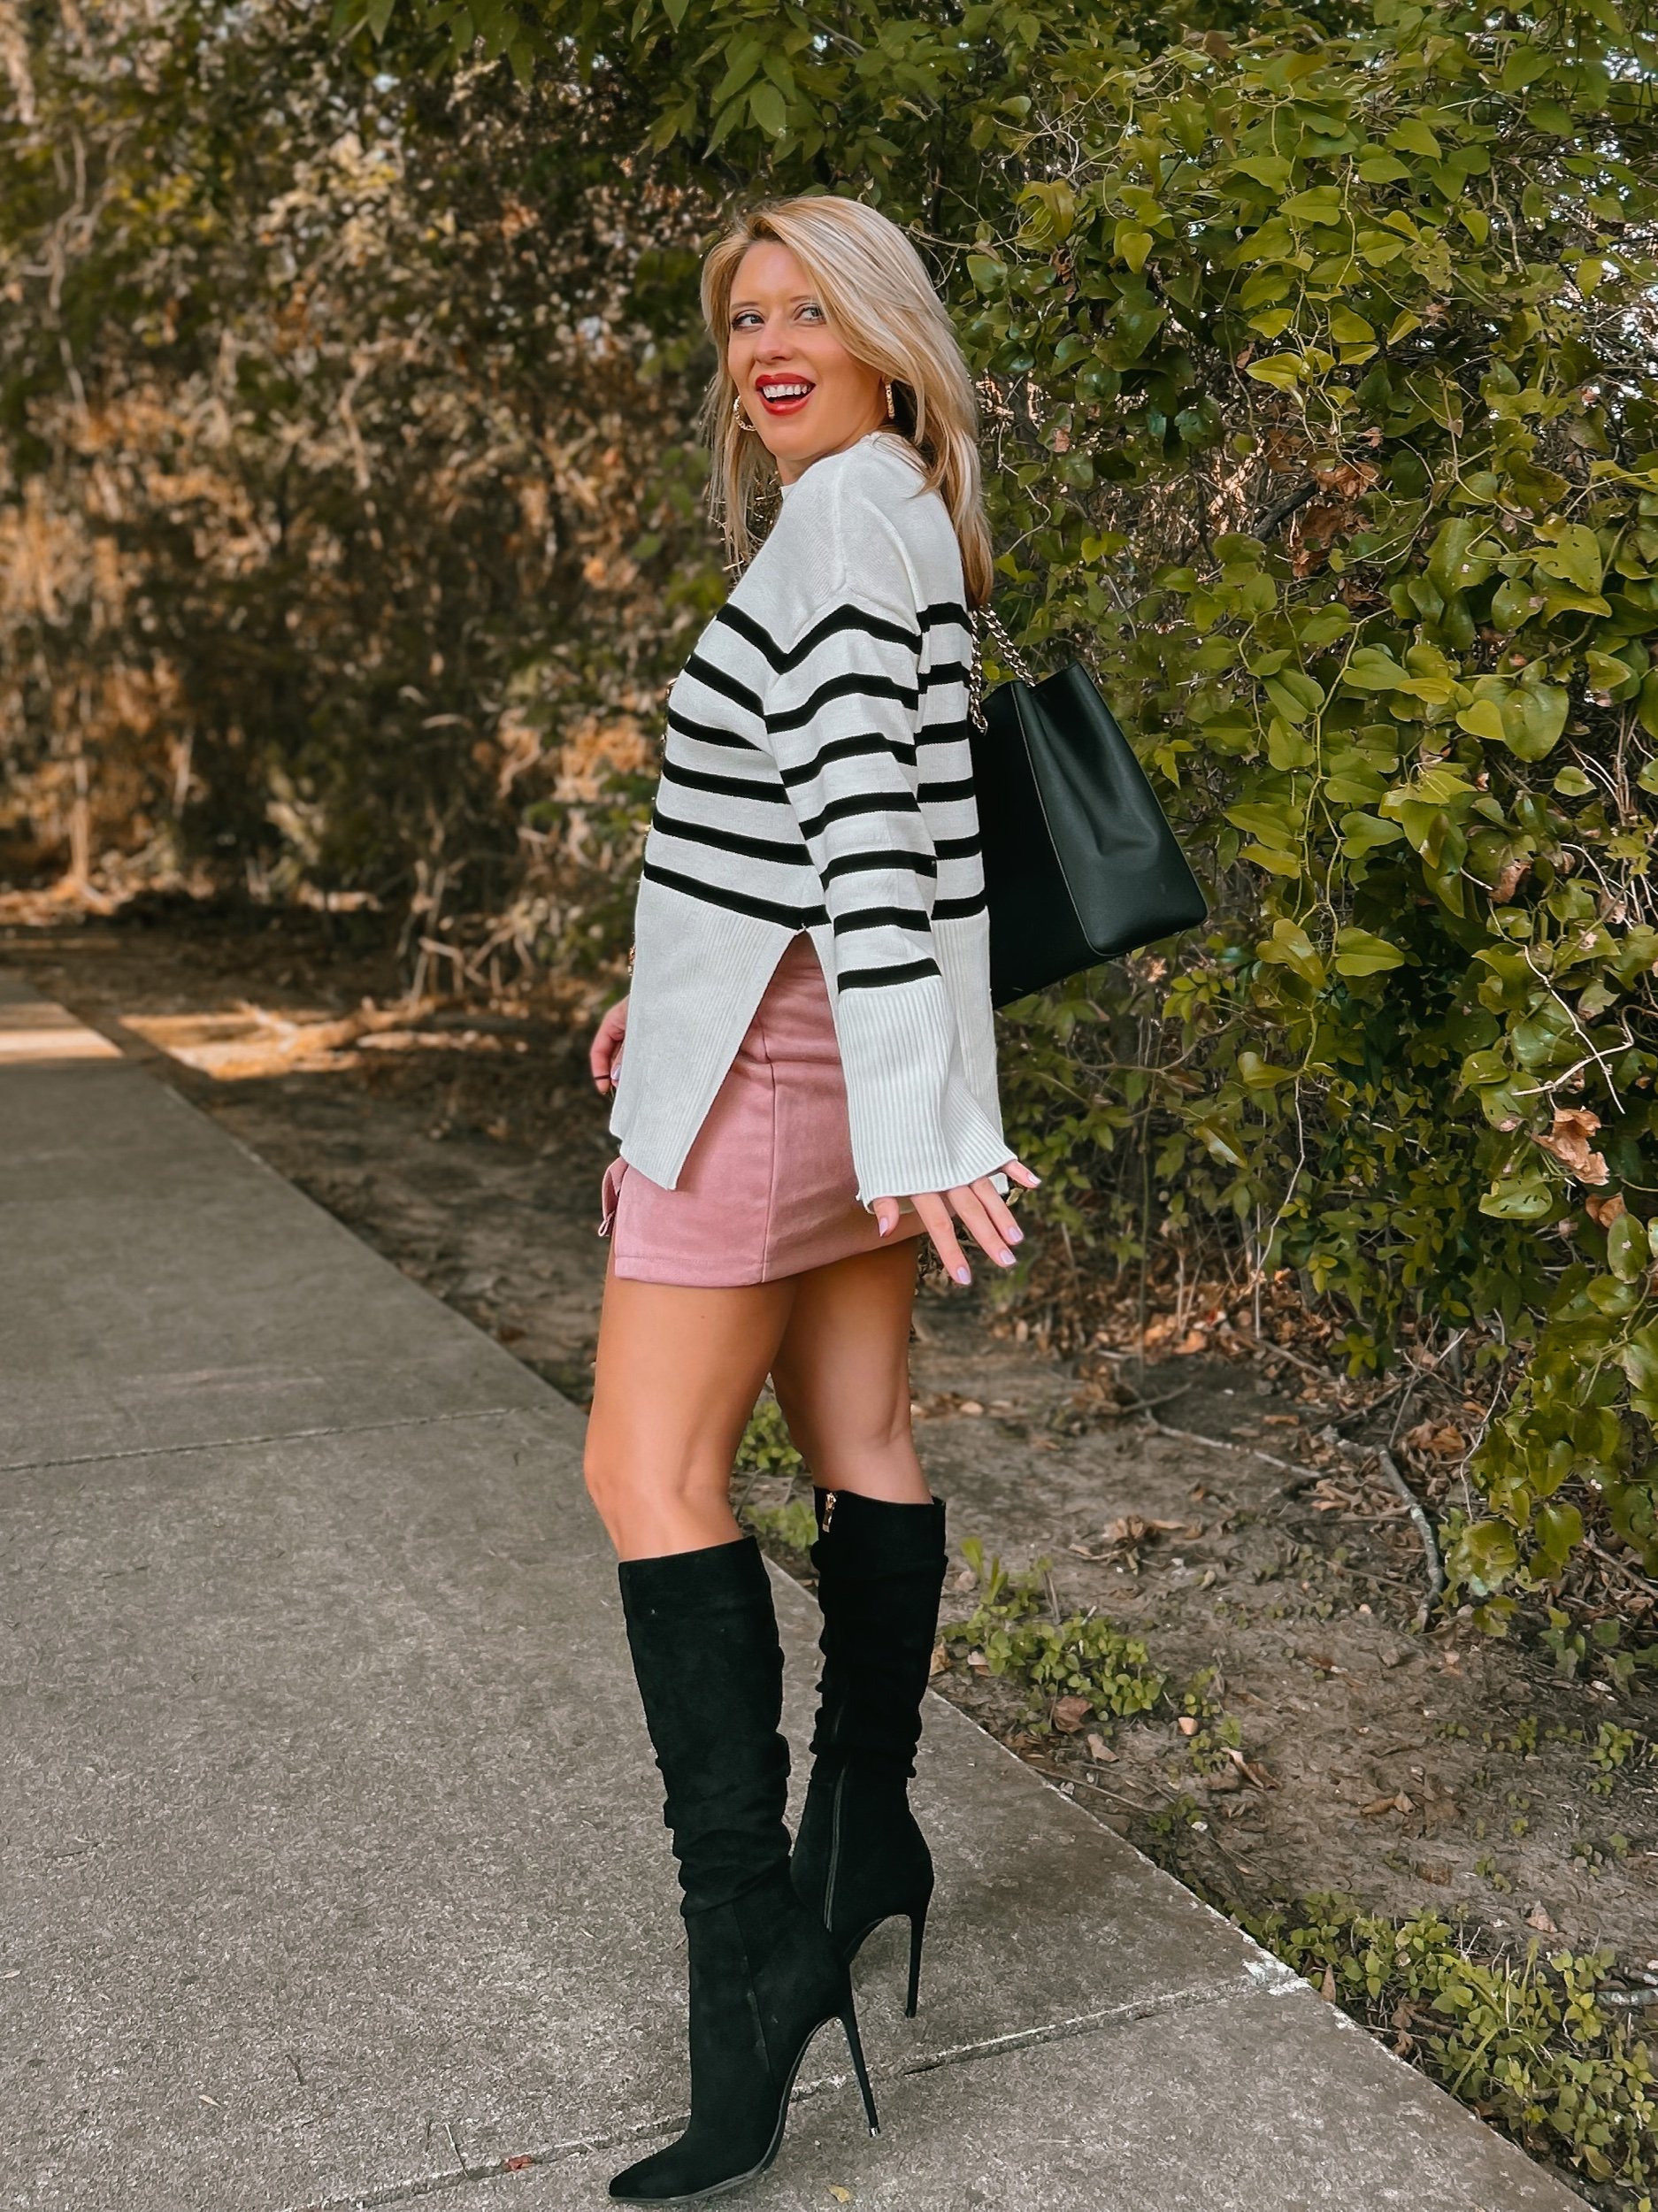 Three Heel Clicks - Softest Stripe Sweater Ever